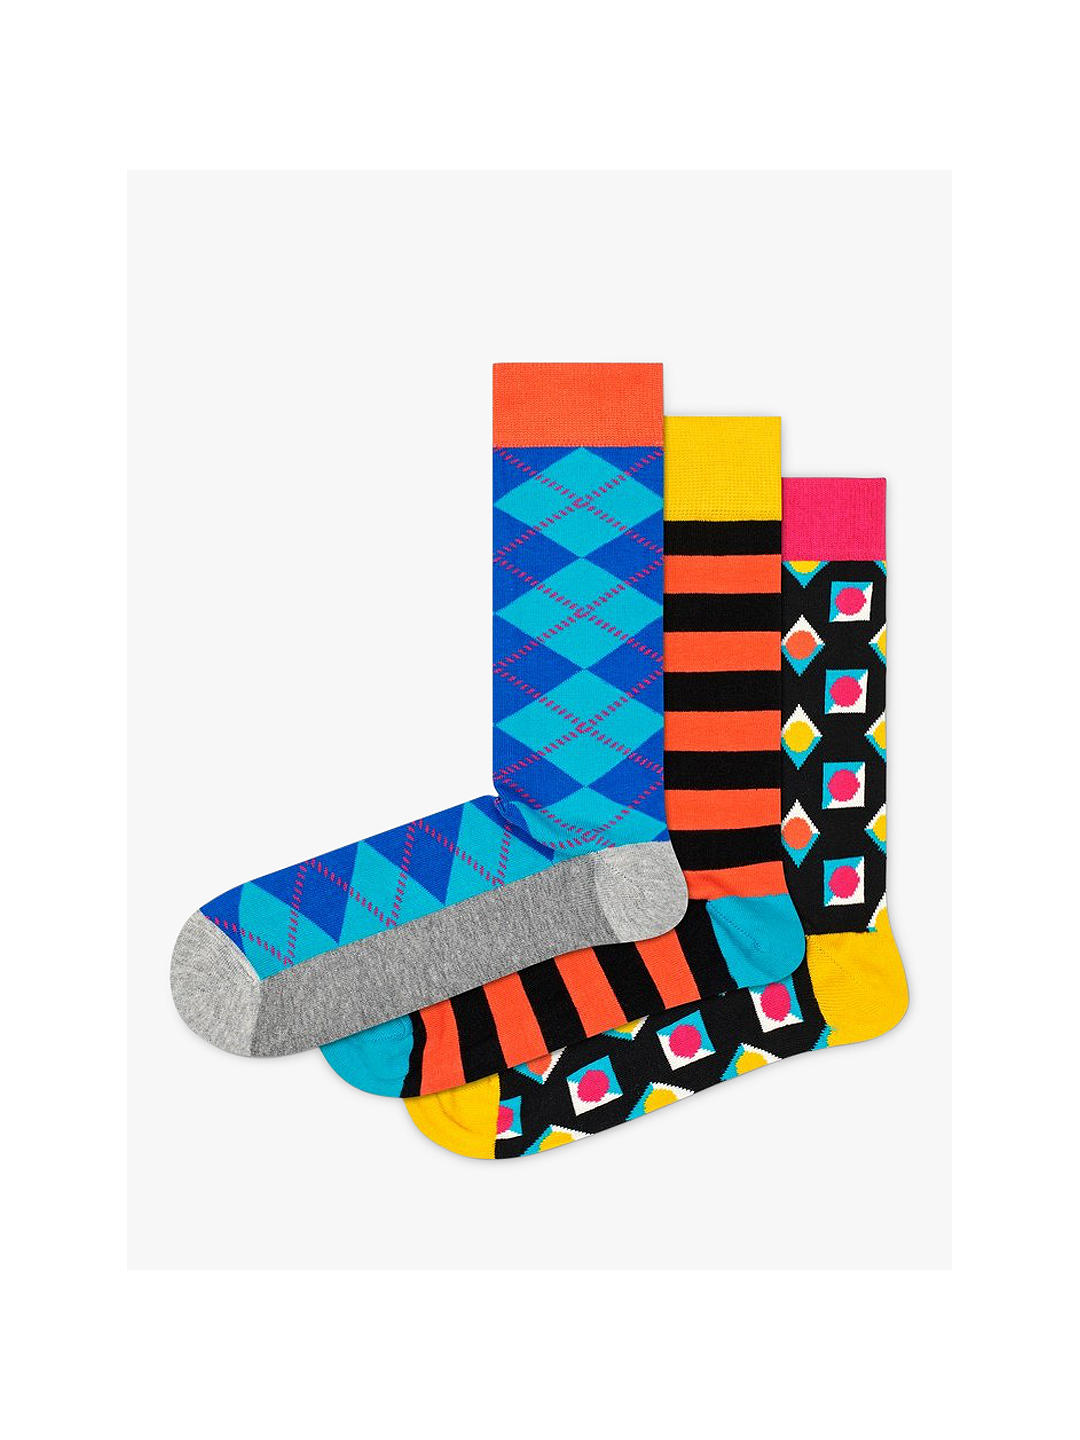 Happy Socks Argyle, Stripe And Geometric Print Socks, Pack of 3, Multi